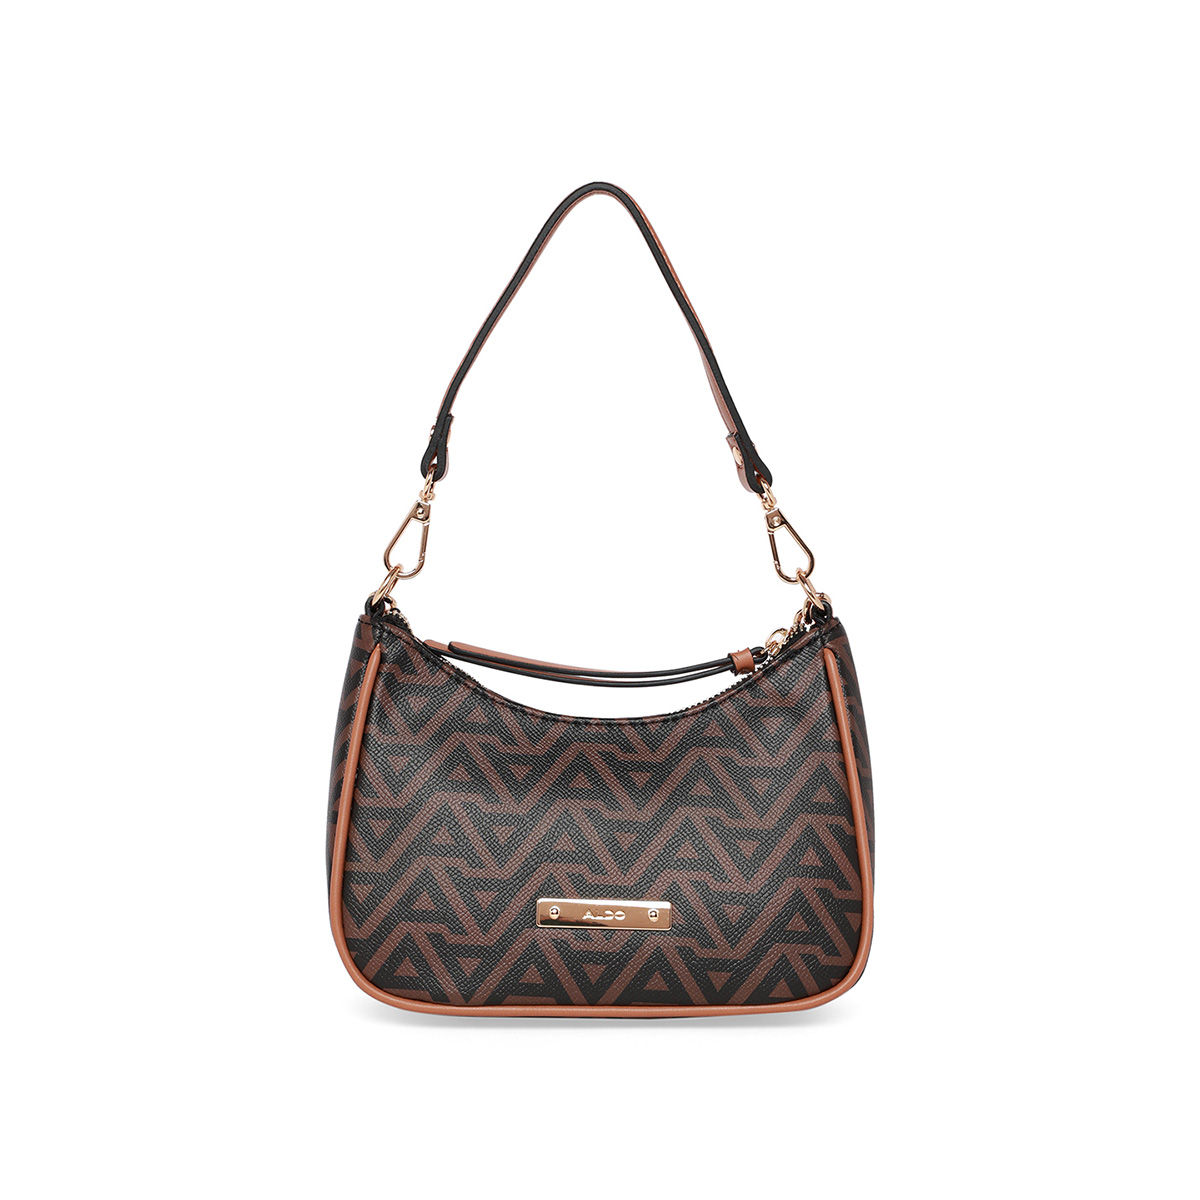 Buy ALDO Navy Blue & White Striped Handheld Bag - Handbags for Women  11506622 | Myntra